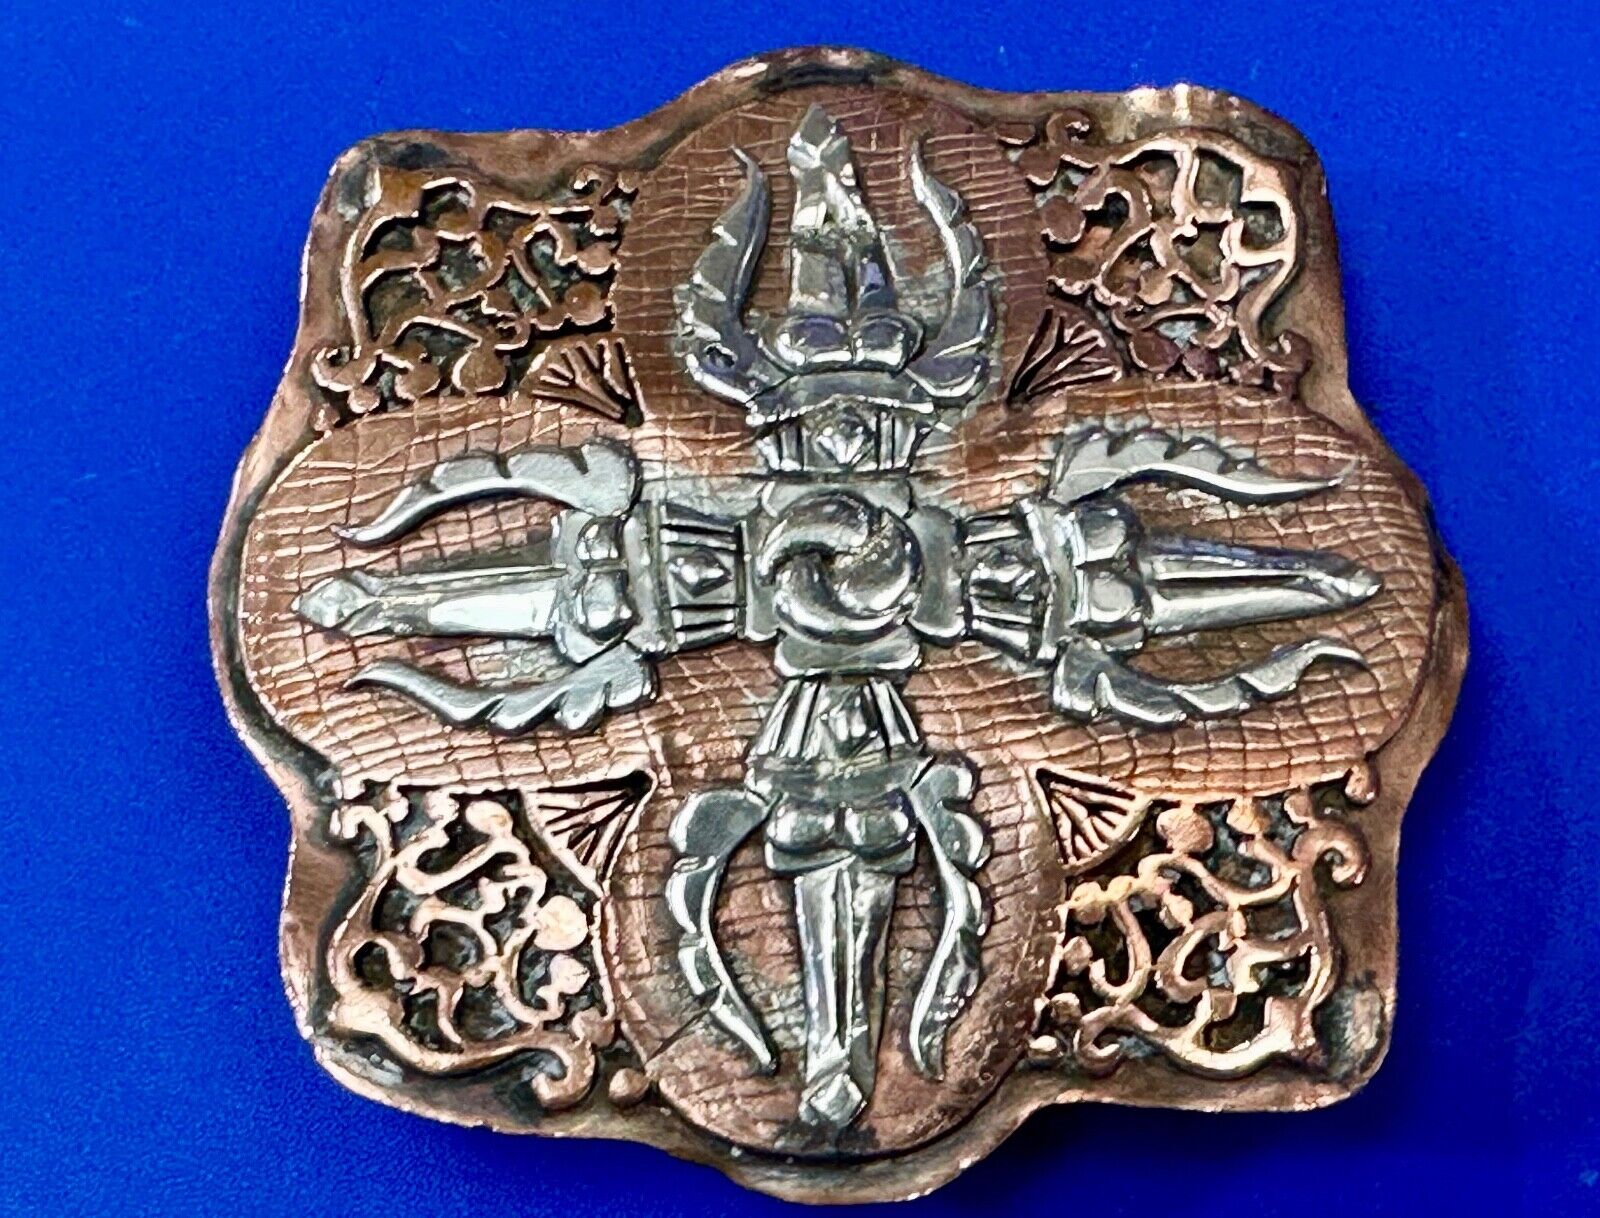 GORGEOUS geometric pattern two tone hippie style bronze artisan belt buckle